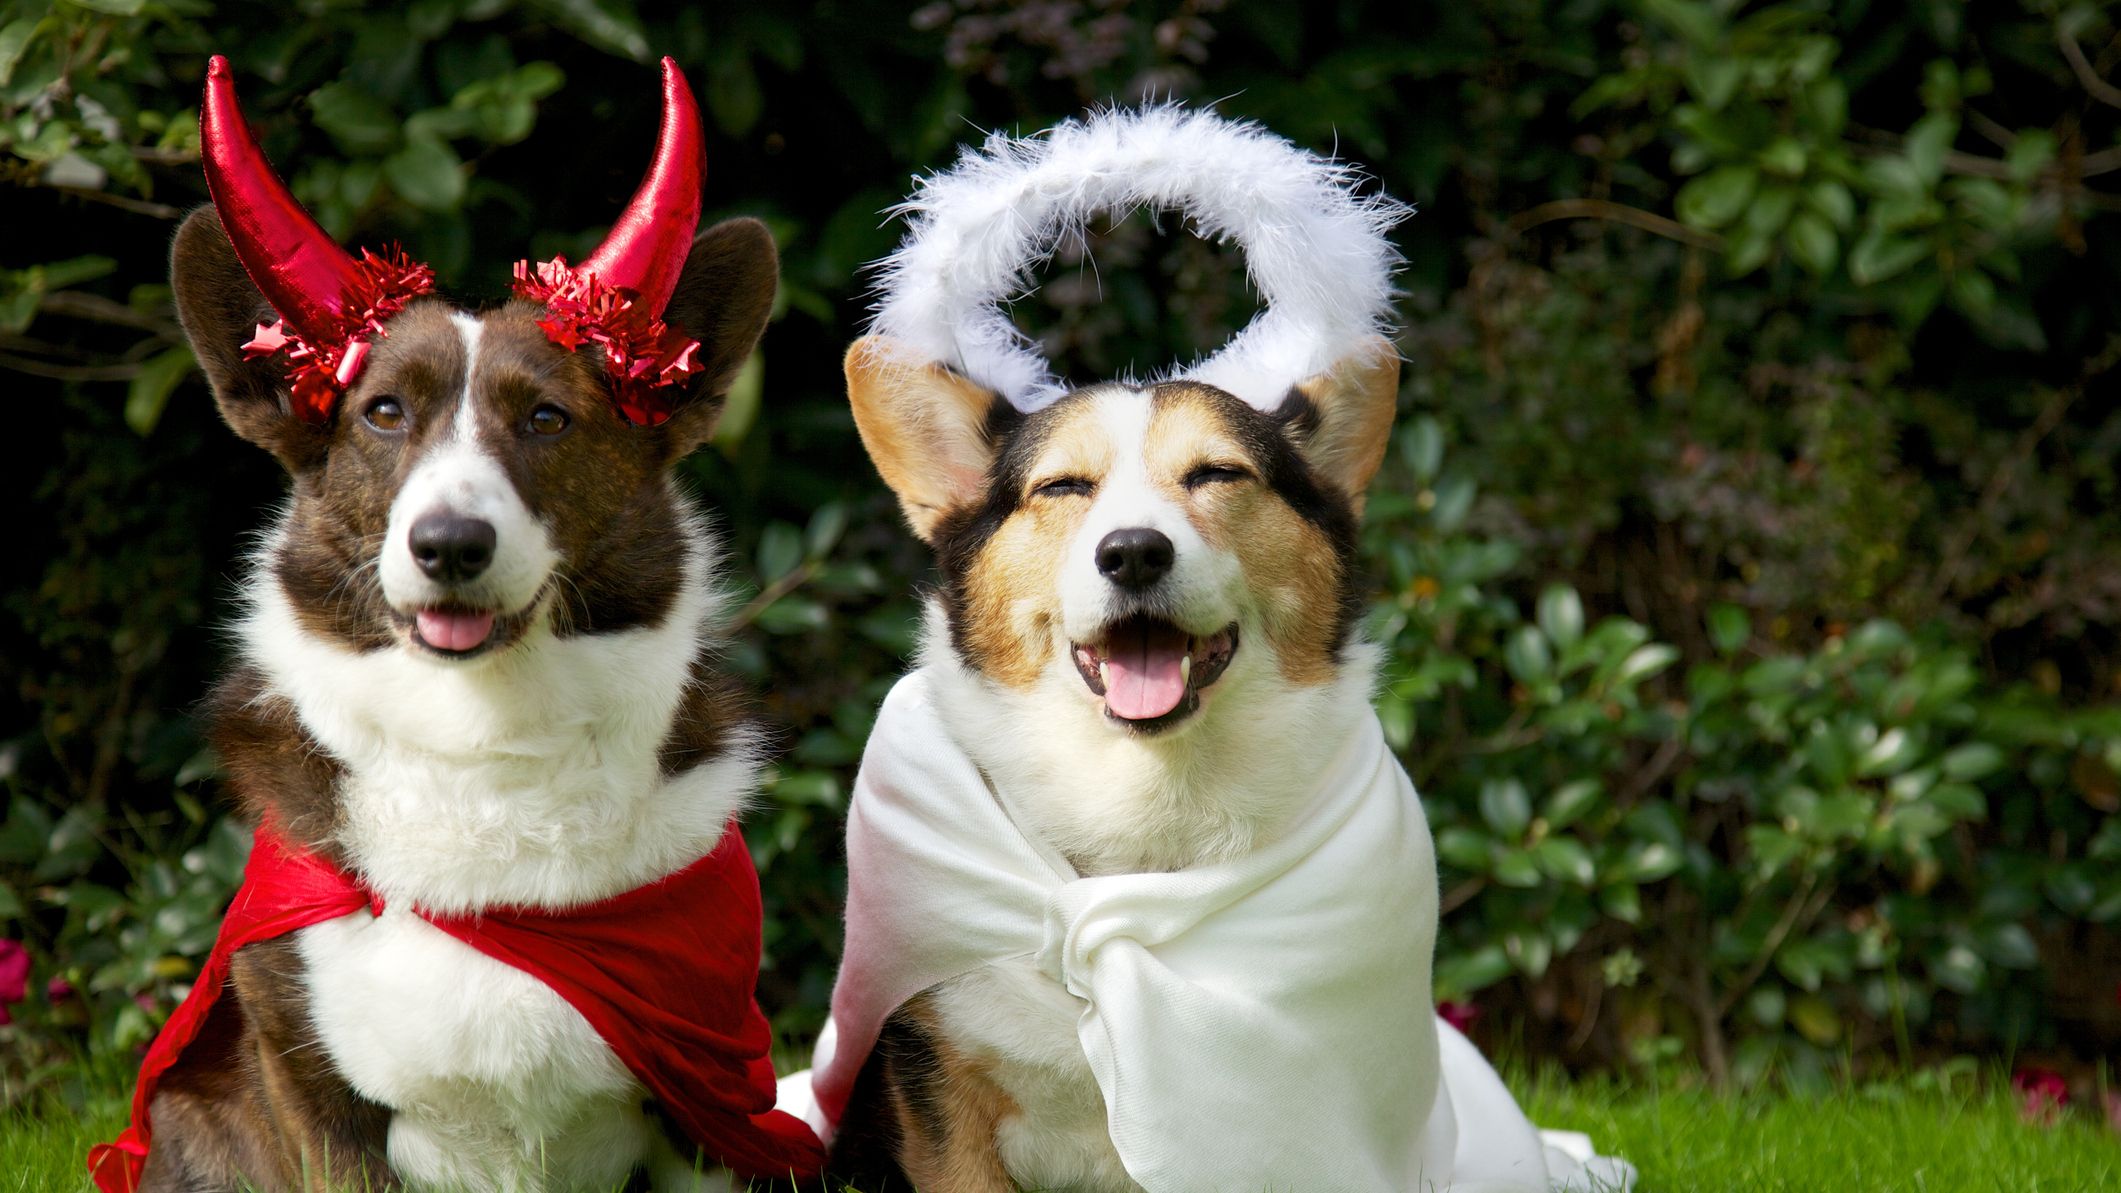 8 Cutest Fashion Designer & Celebrity Pet Dogs